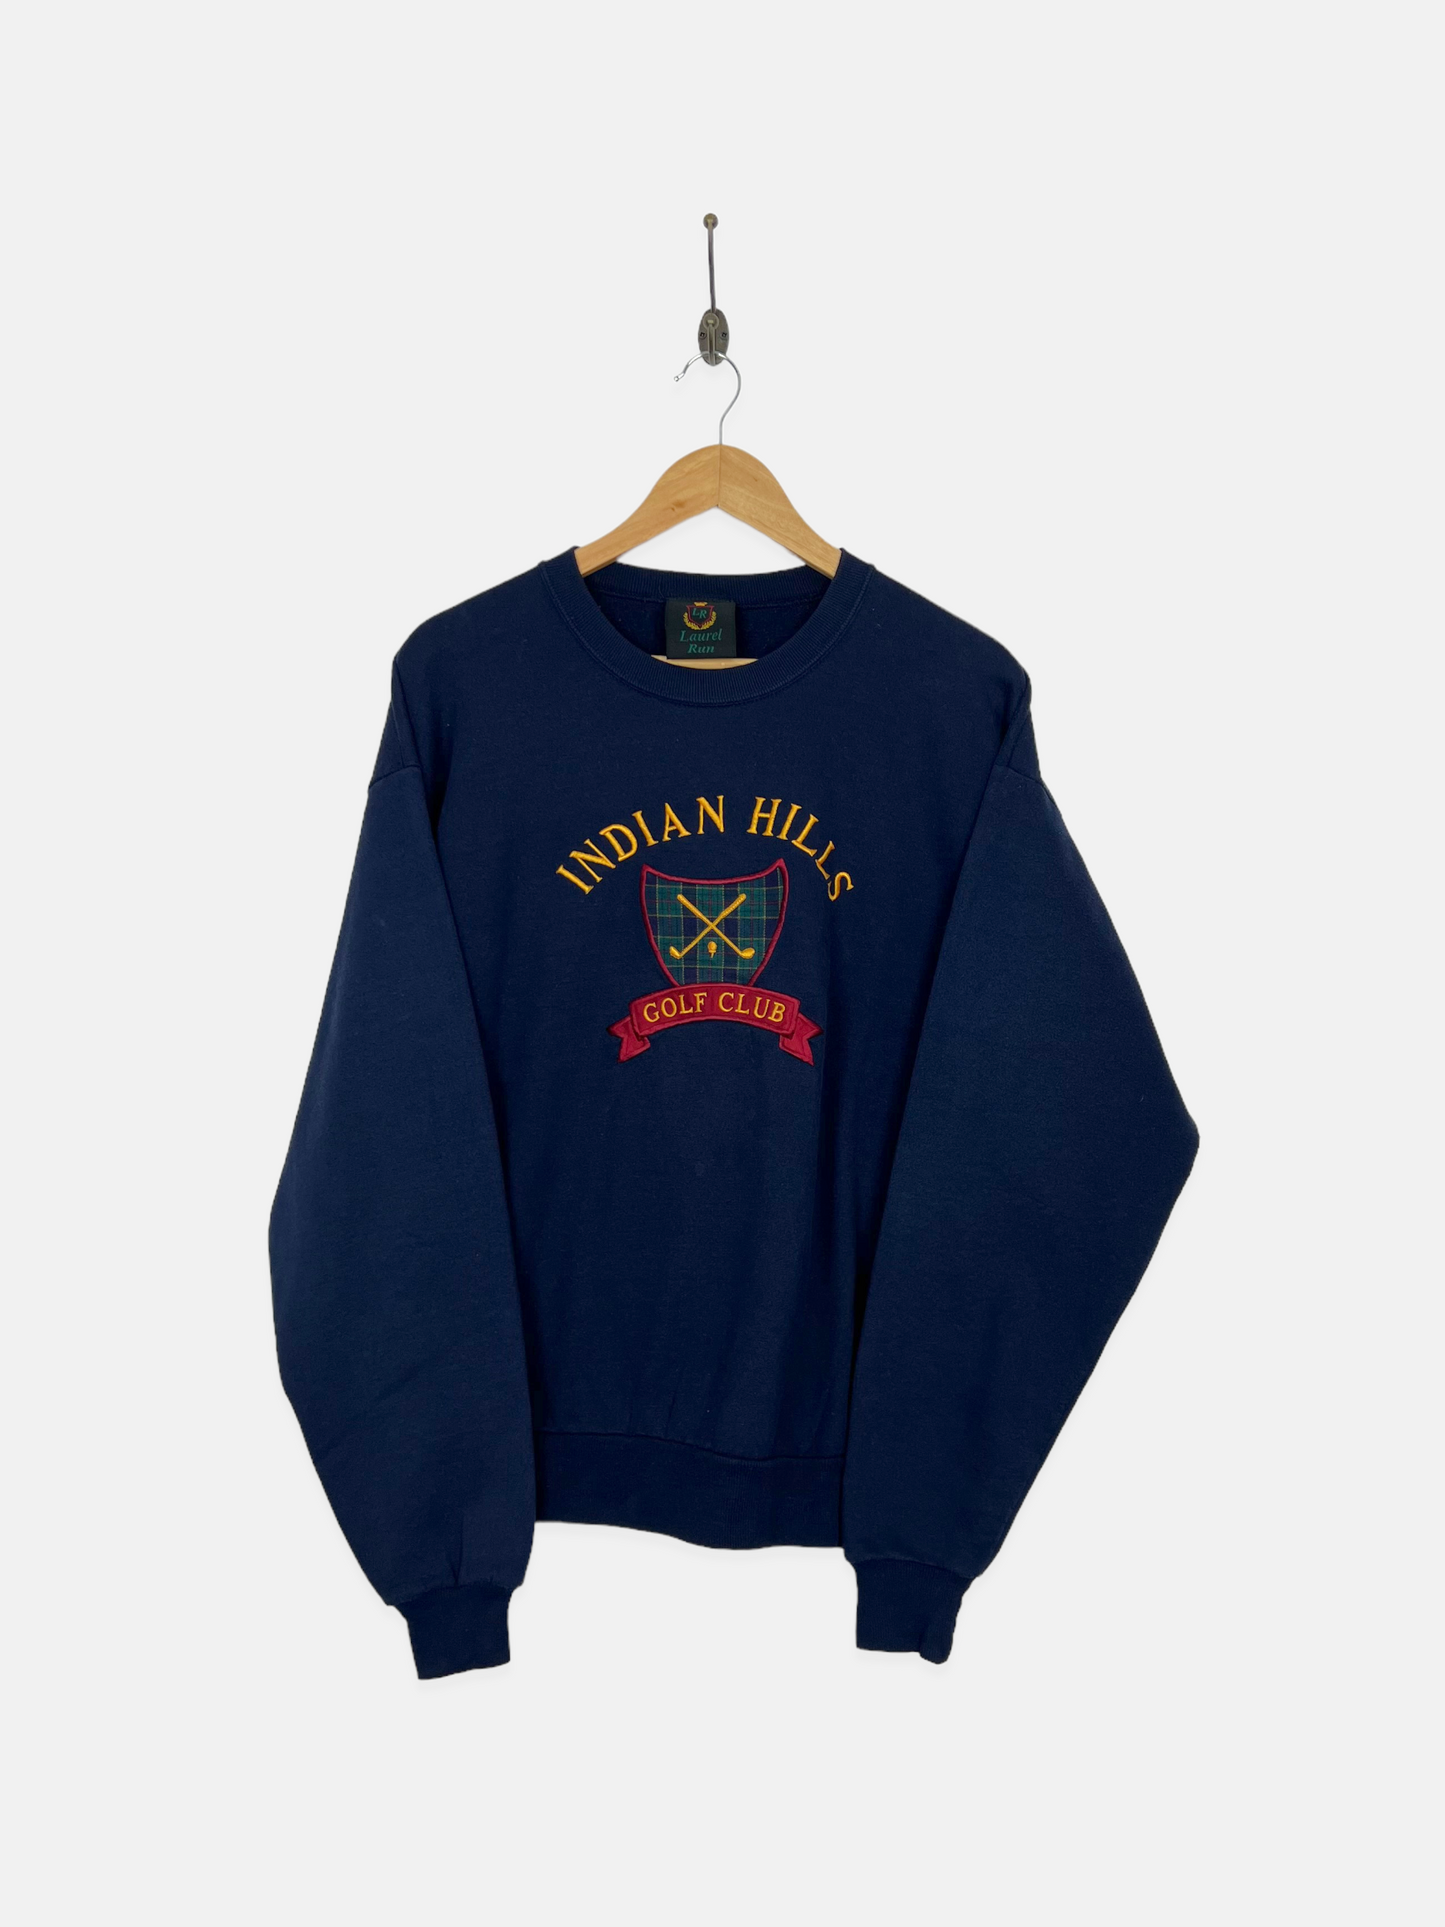 90's Indian Hills Golf Club Embroidered Vintage Sweatshirt Size M